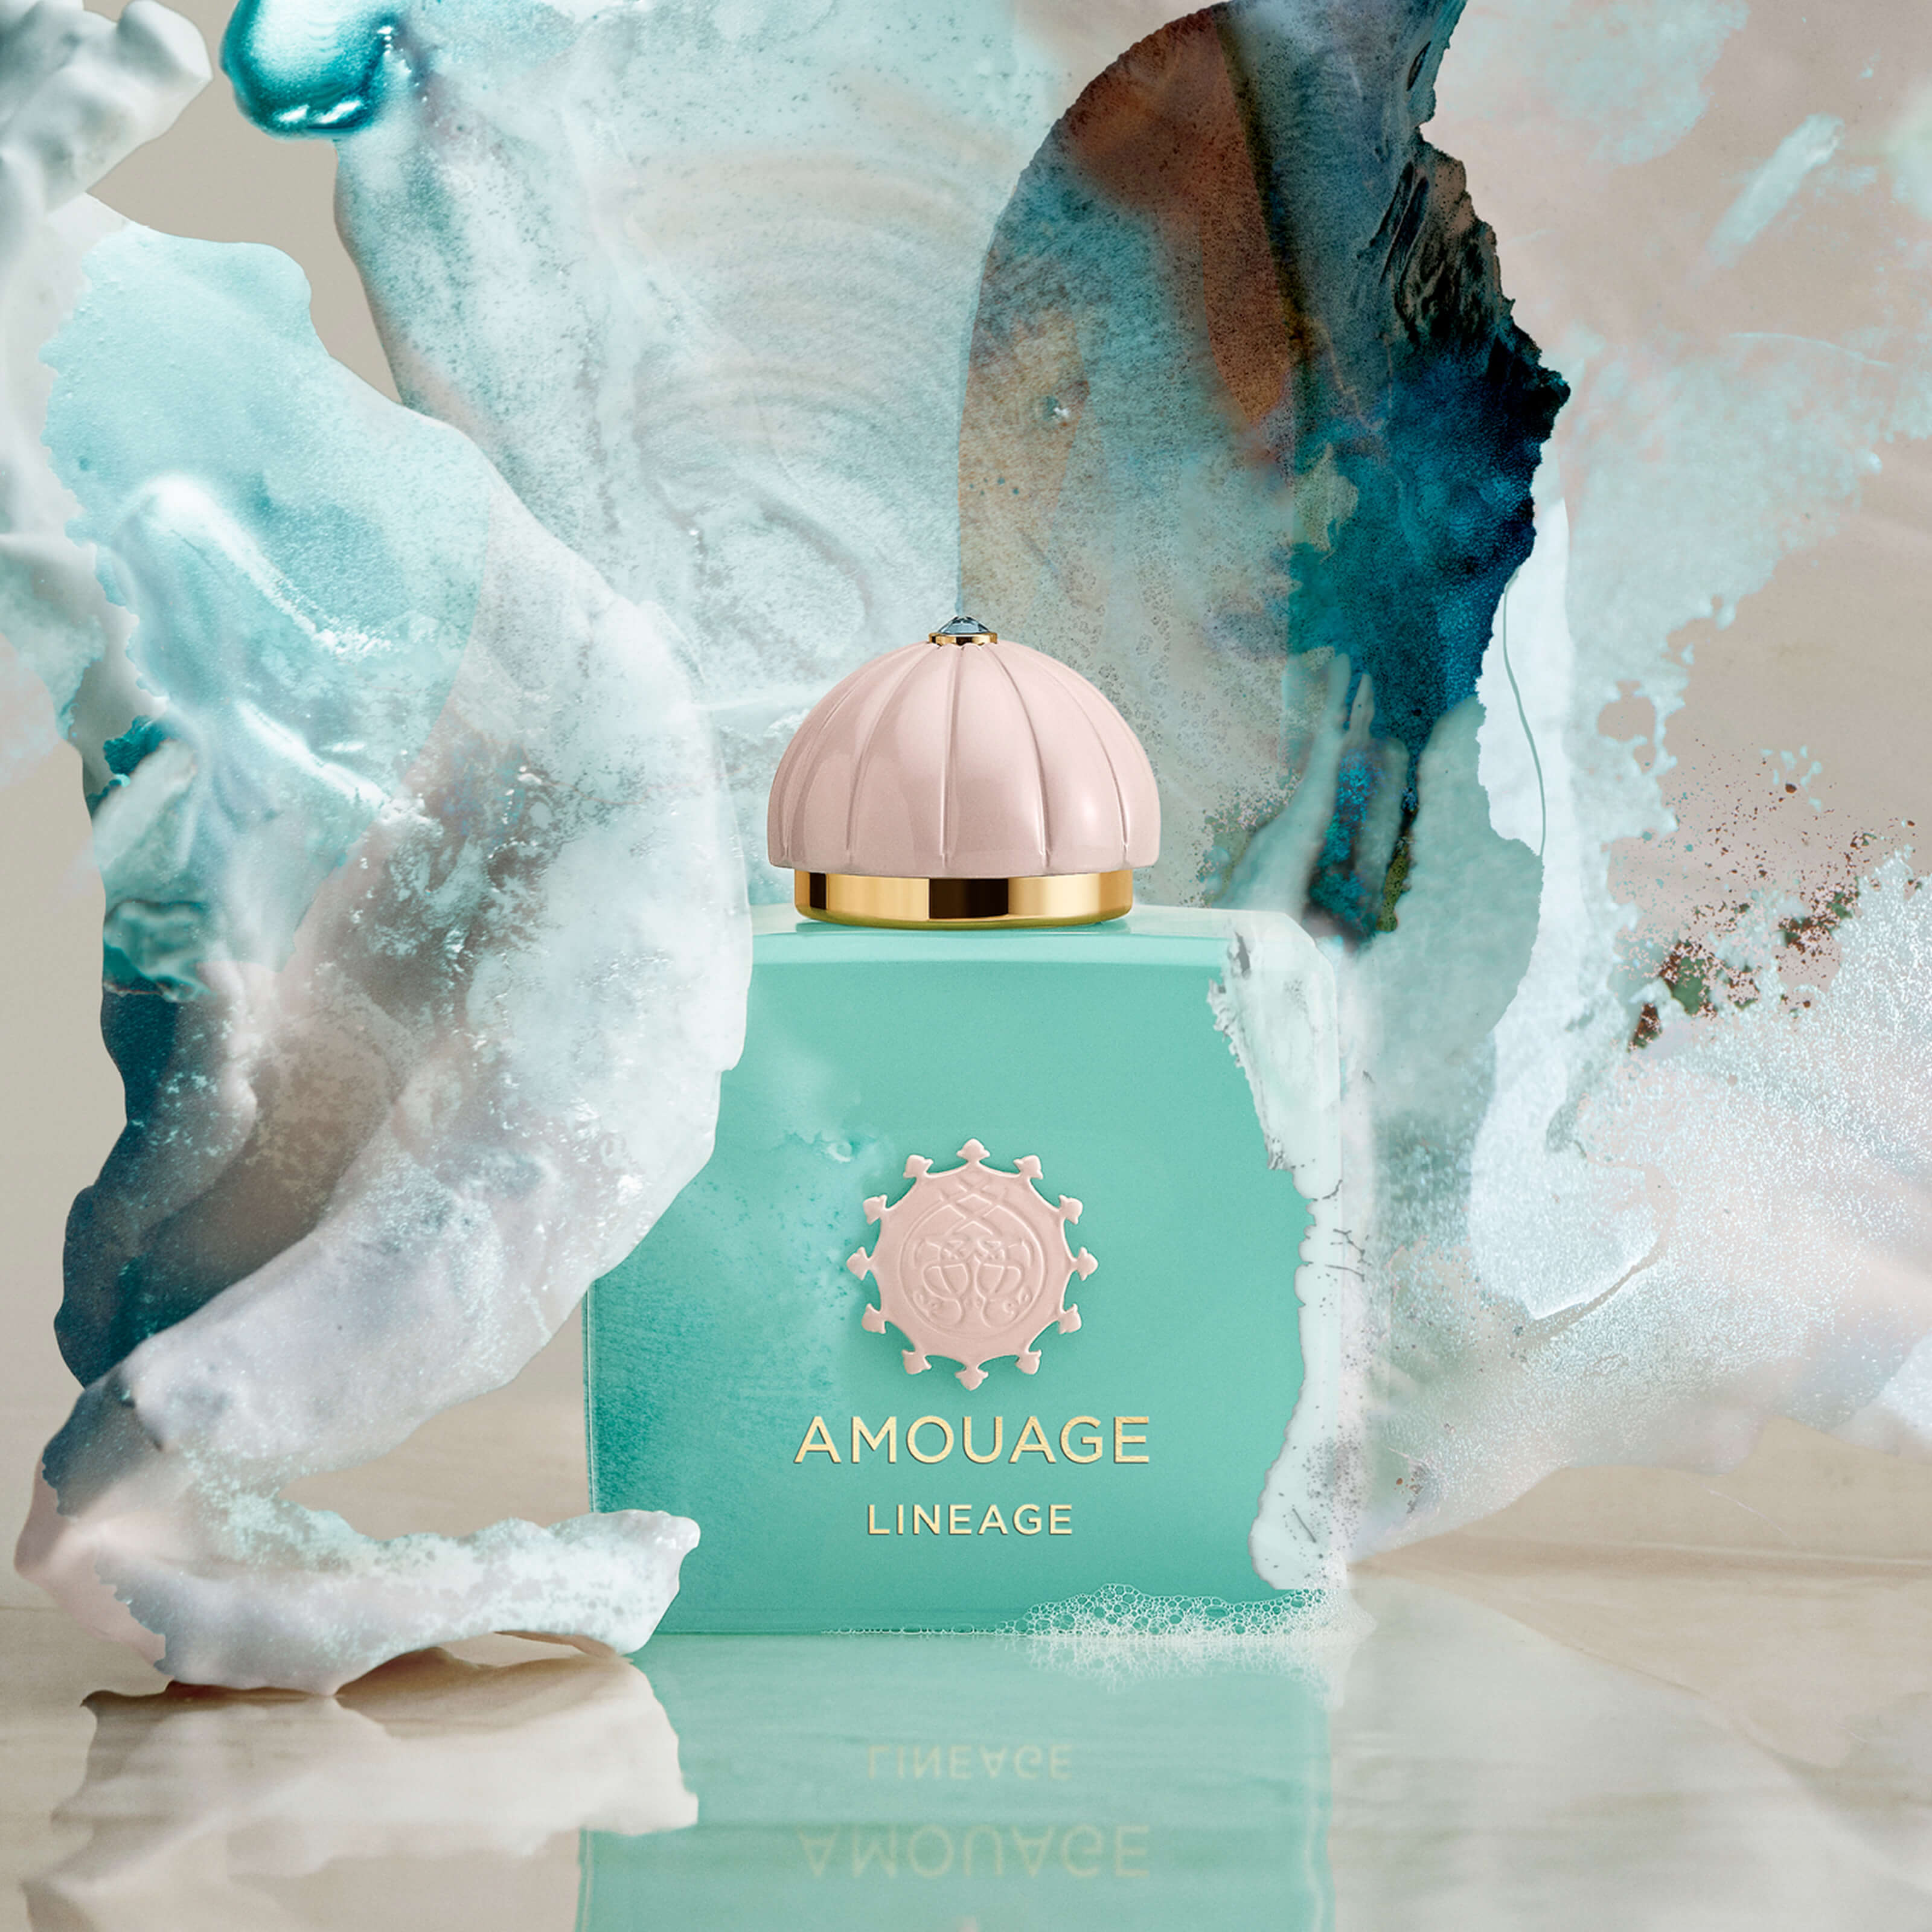 Amouage Lineage – Luxe Perfumery